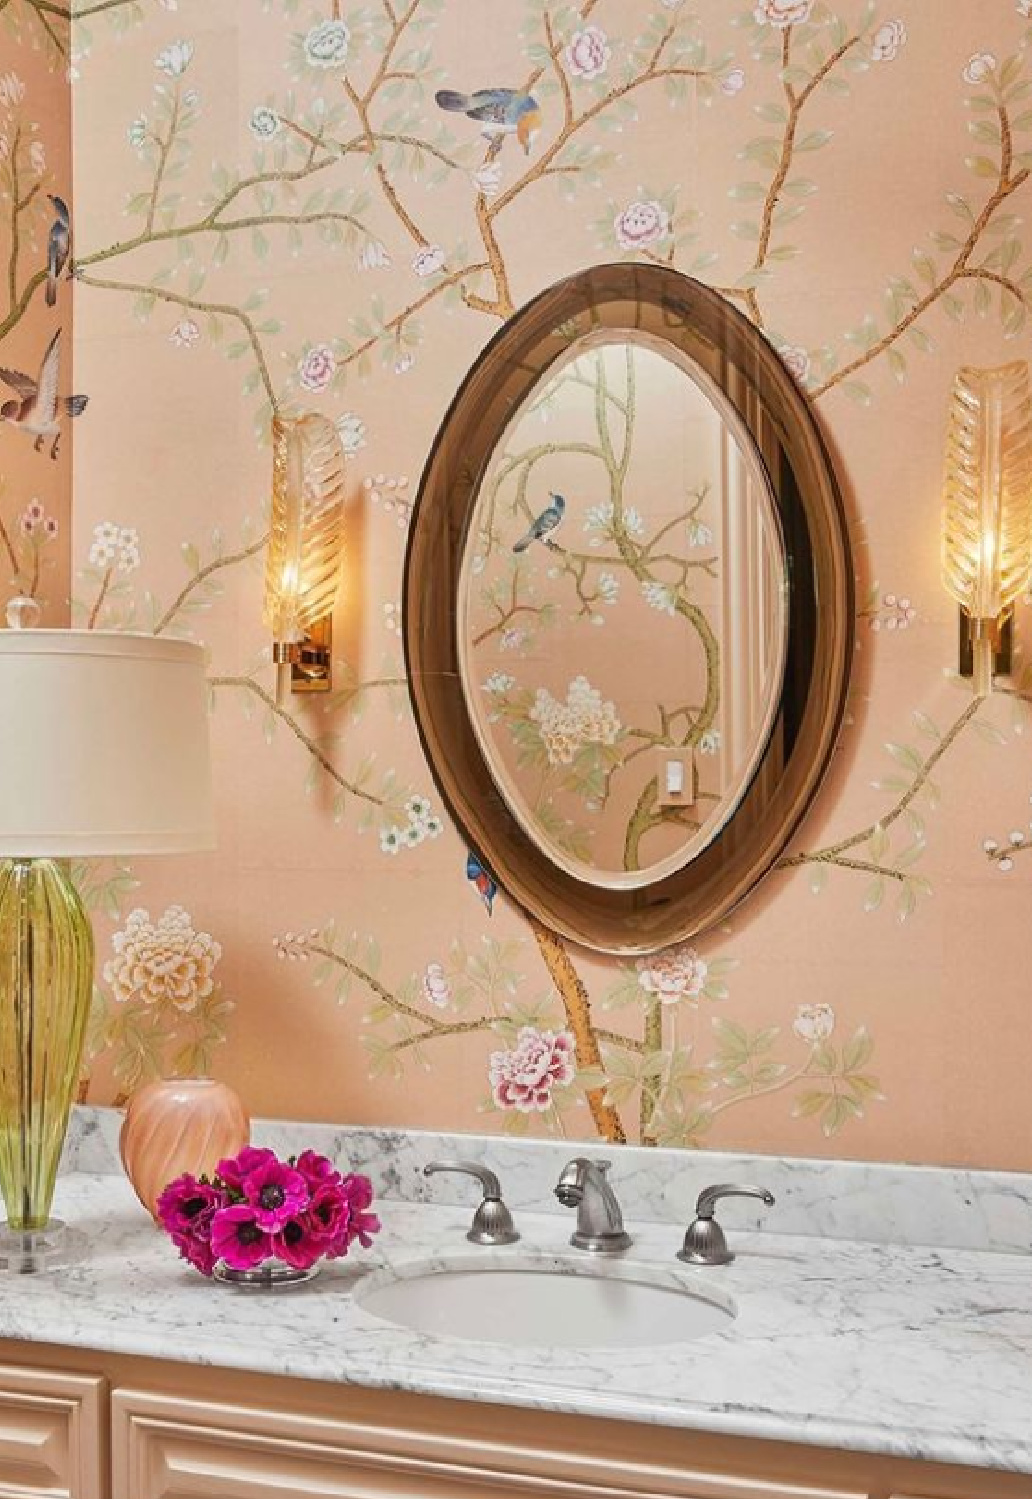 de Gournay Portobello Gentleman's Pink in dyed silk wallpaper in a bath designed by Jan Showers. #degournay